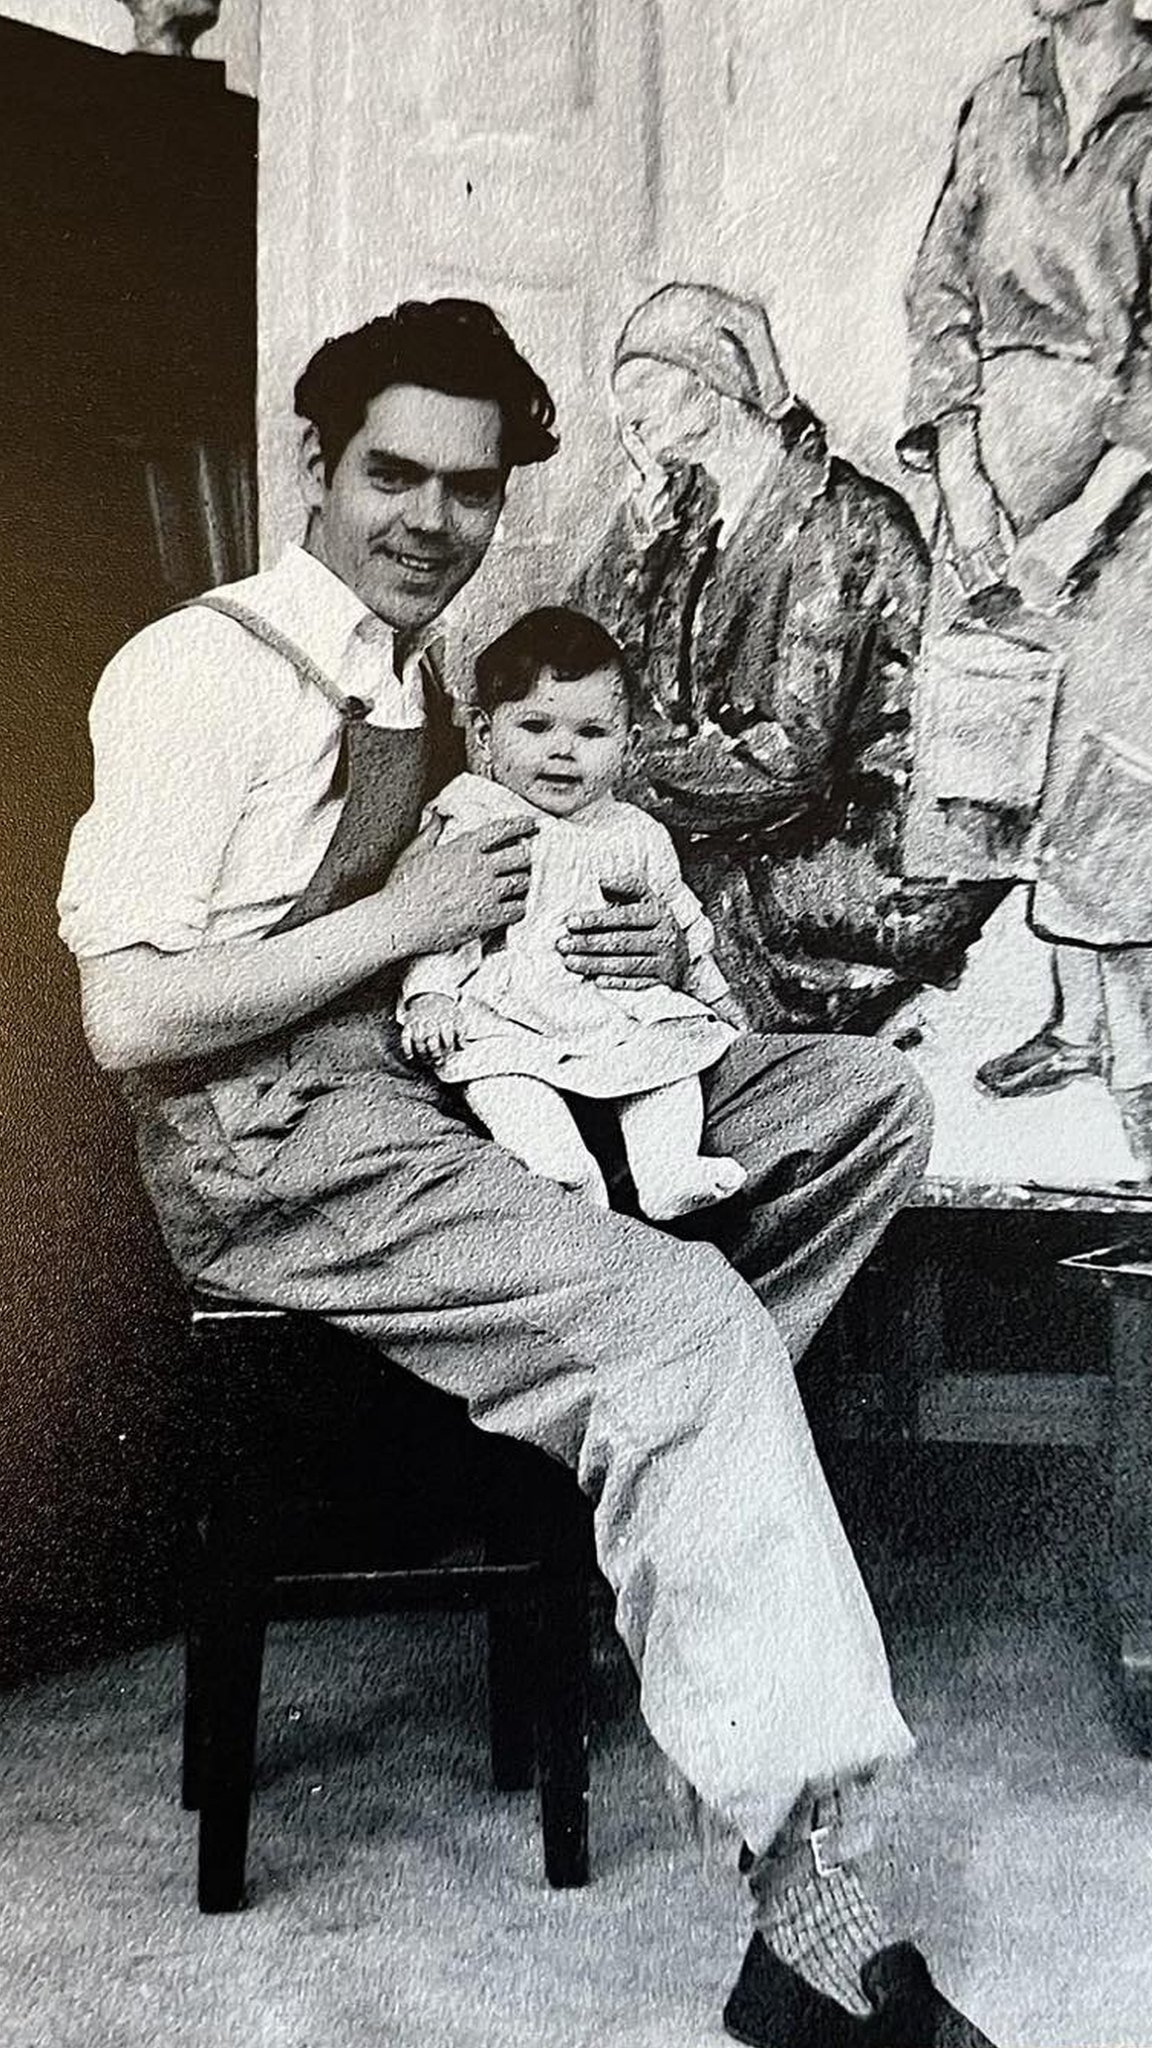 Đorđe Andrejević Kun i njegova ćerka Mira u ateljeu pre Drugog svetskog rata